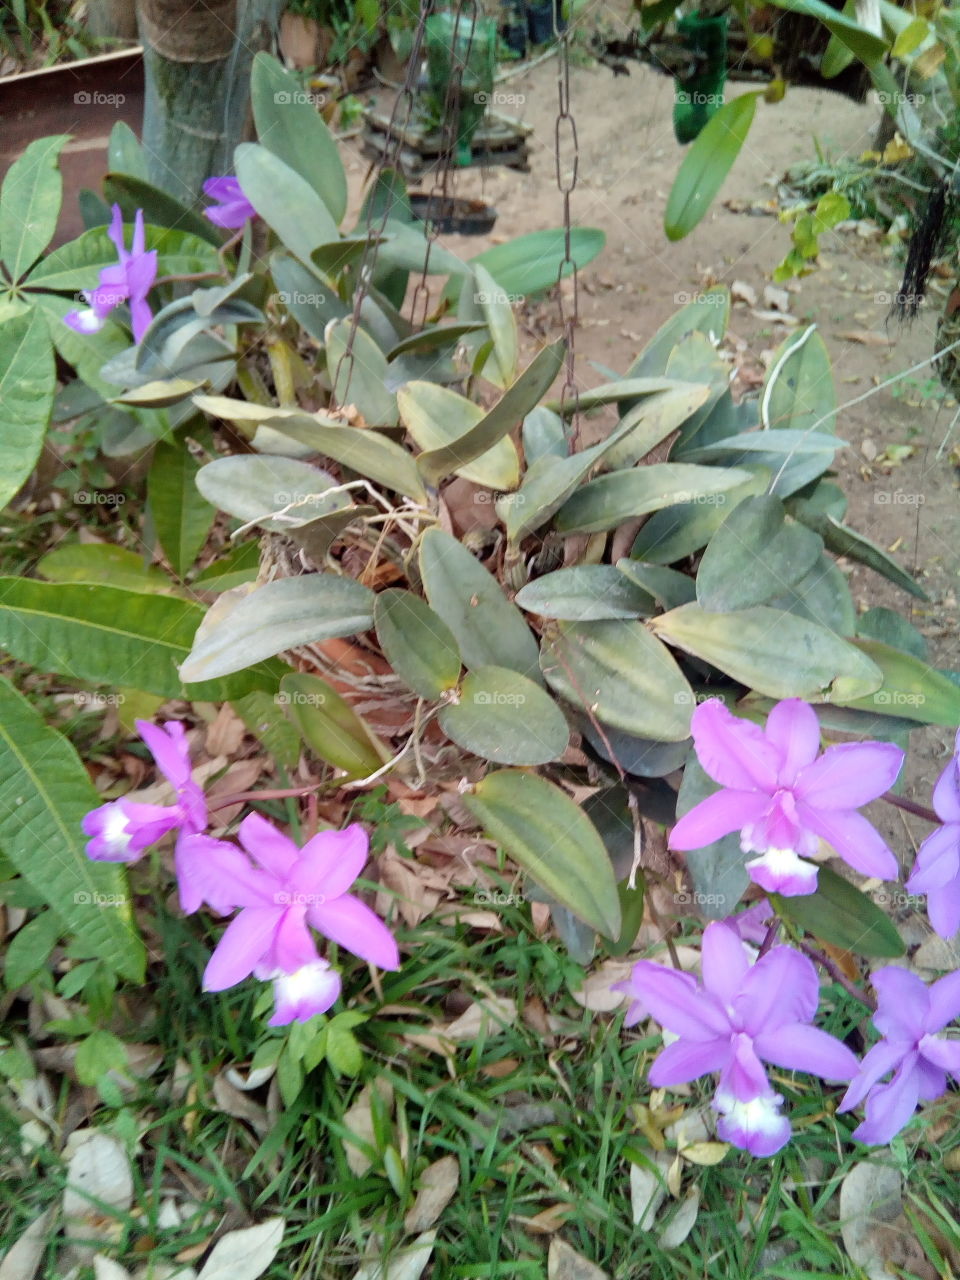 Cattleya dolosa